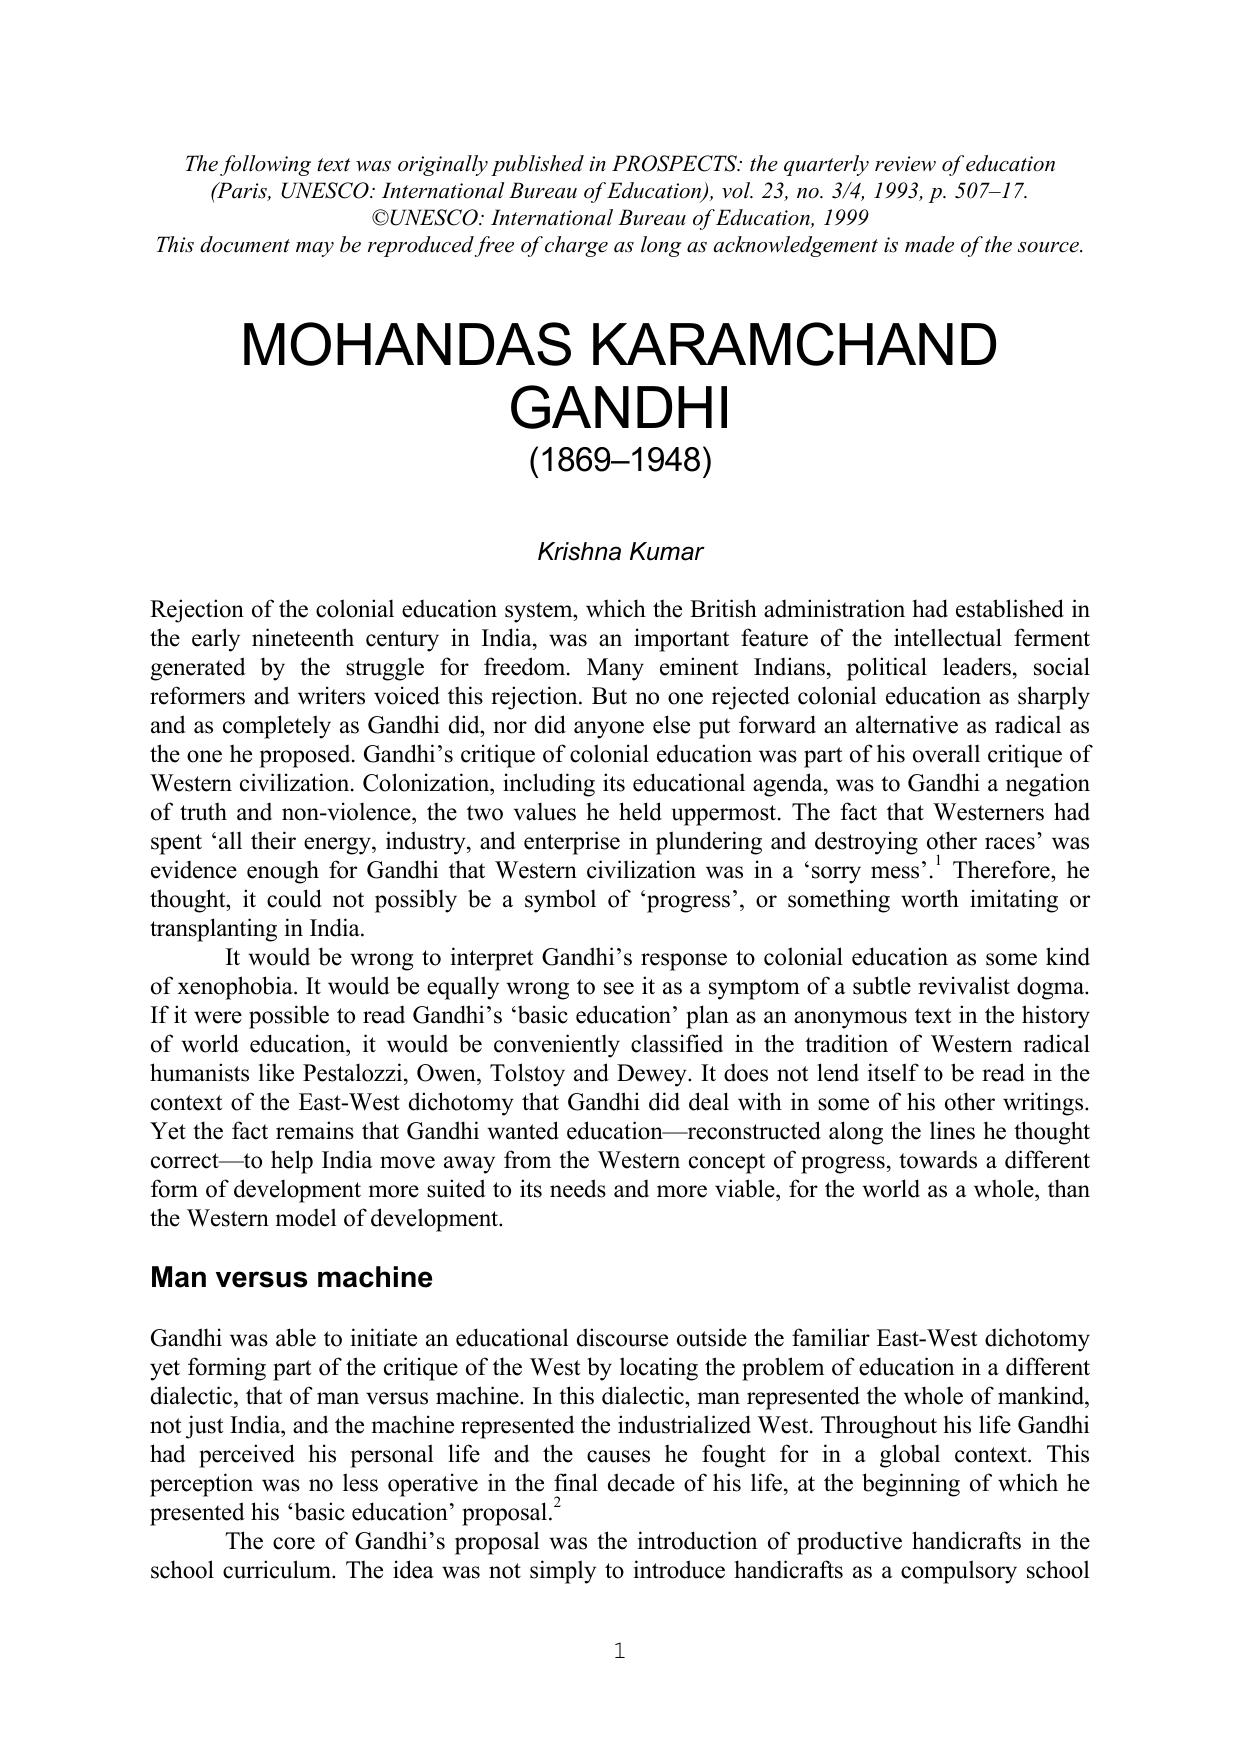 Krishna Kumar1993 Mohandas Karamchand Gandhi